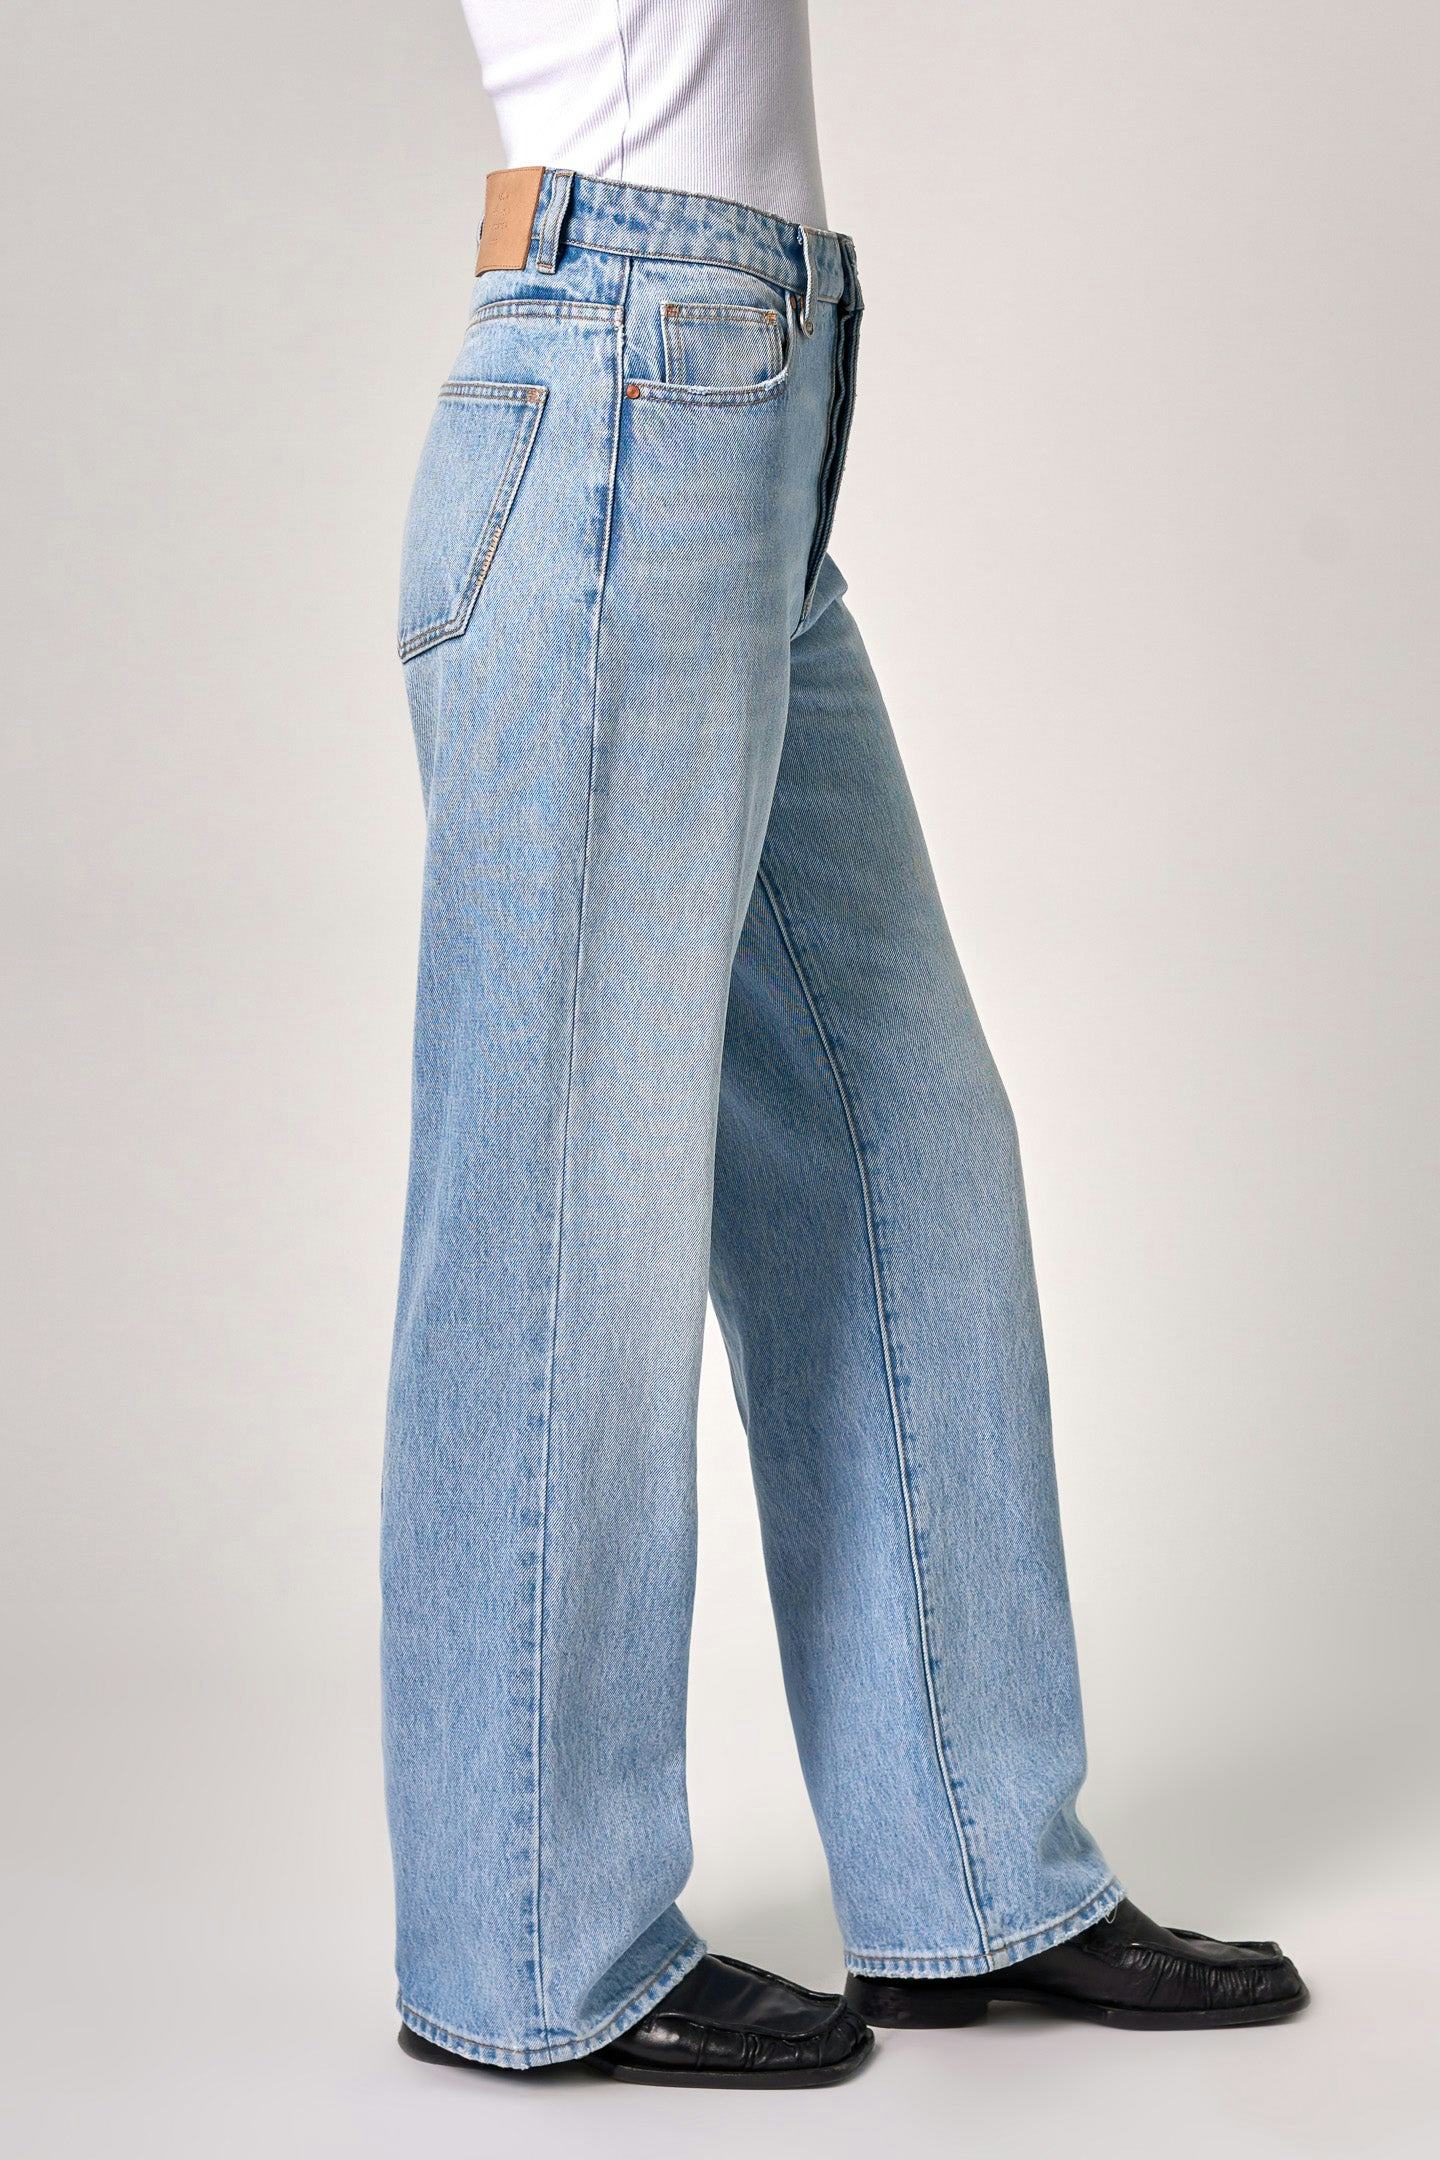 Coco Relaxed - Brooklyn Neuw light lightblue womens-jeans 